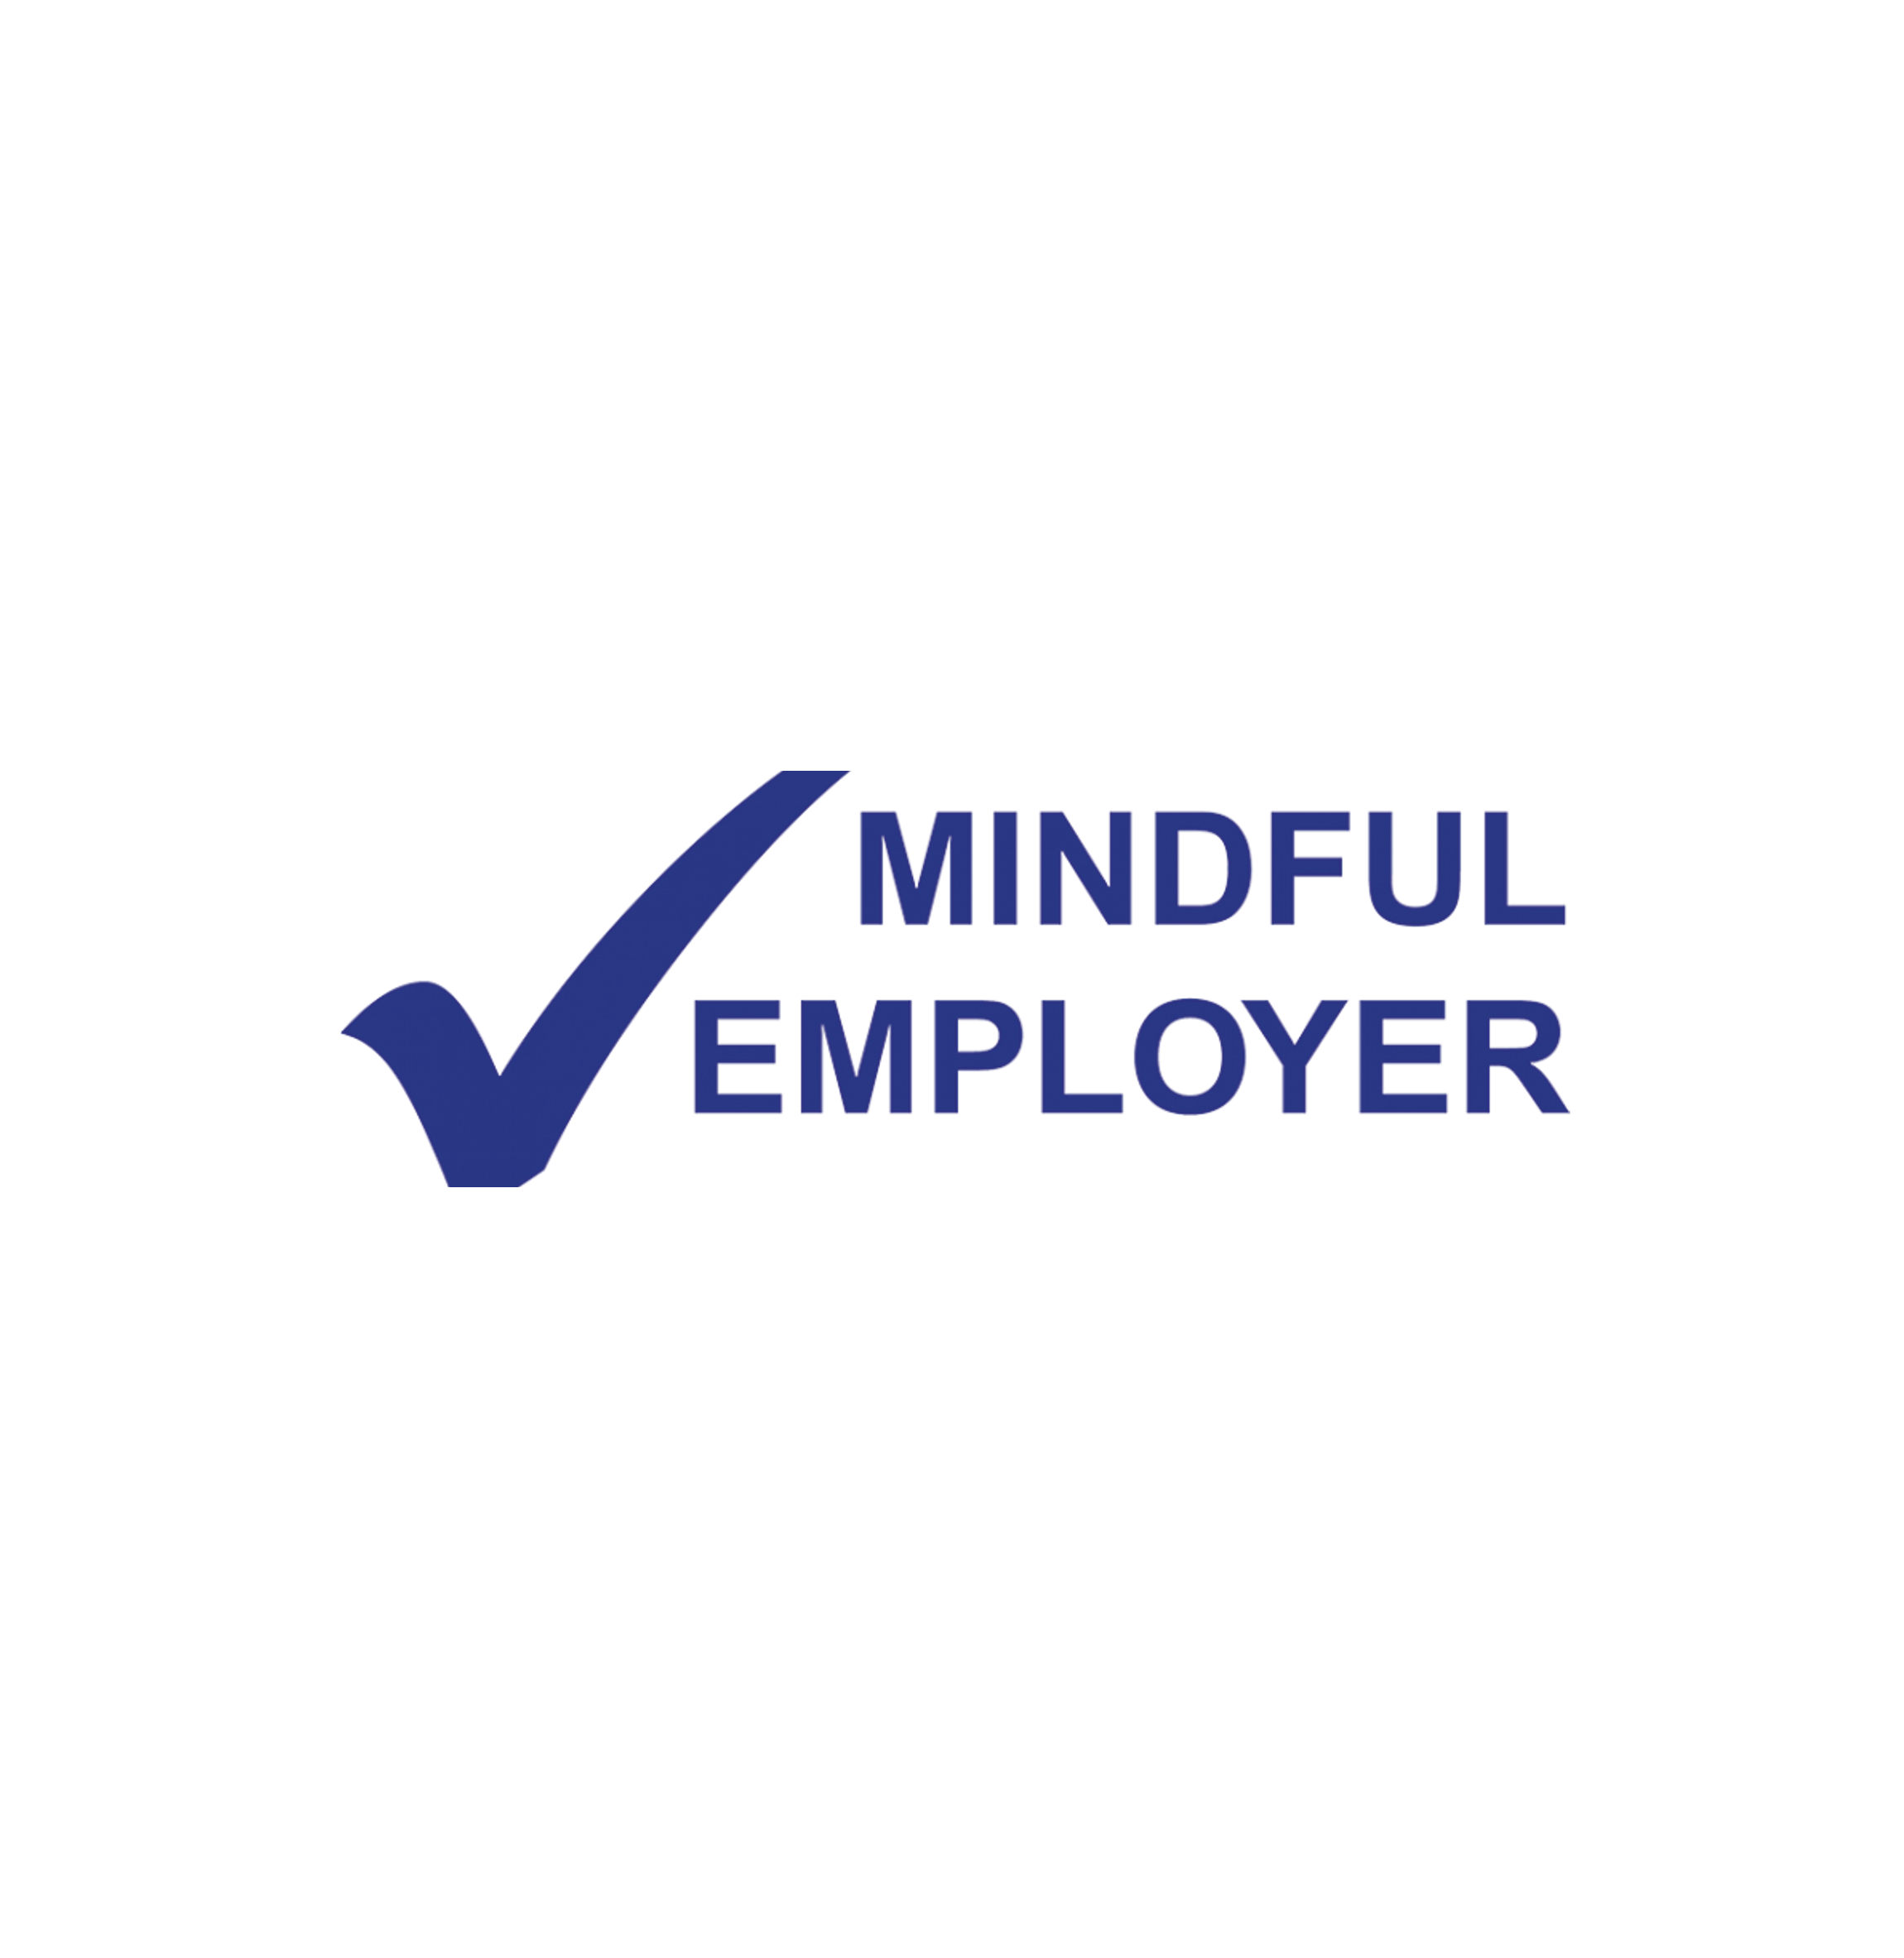 Met Office Jobs - Careers Website - Mindful Employer Logo.png